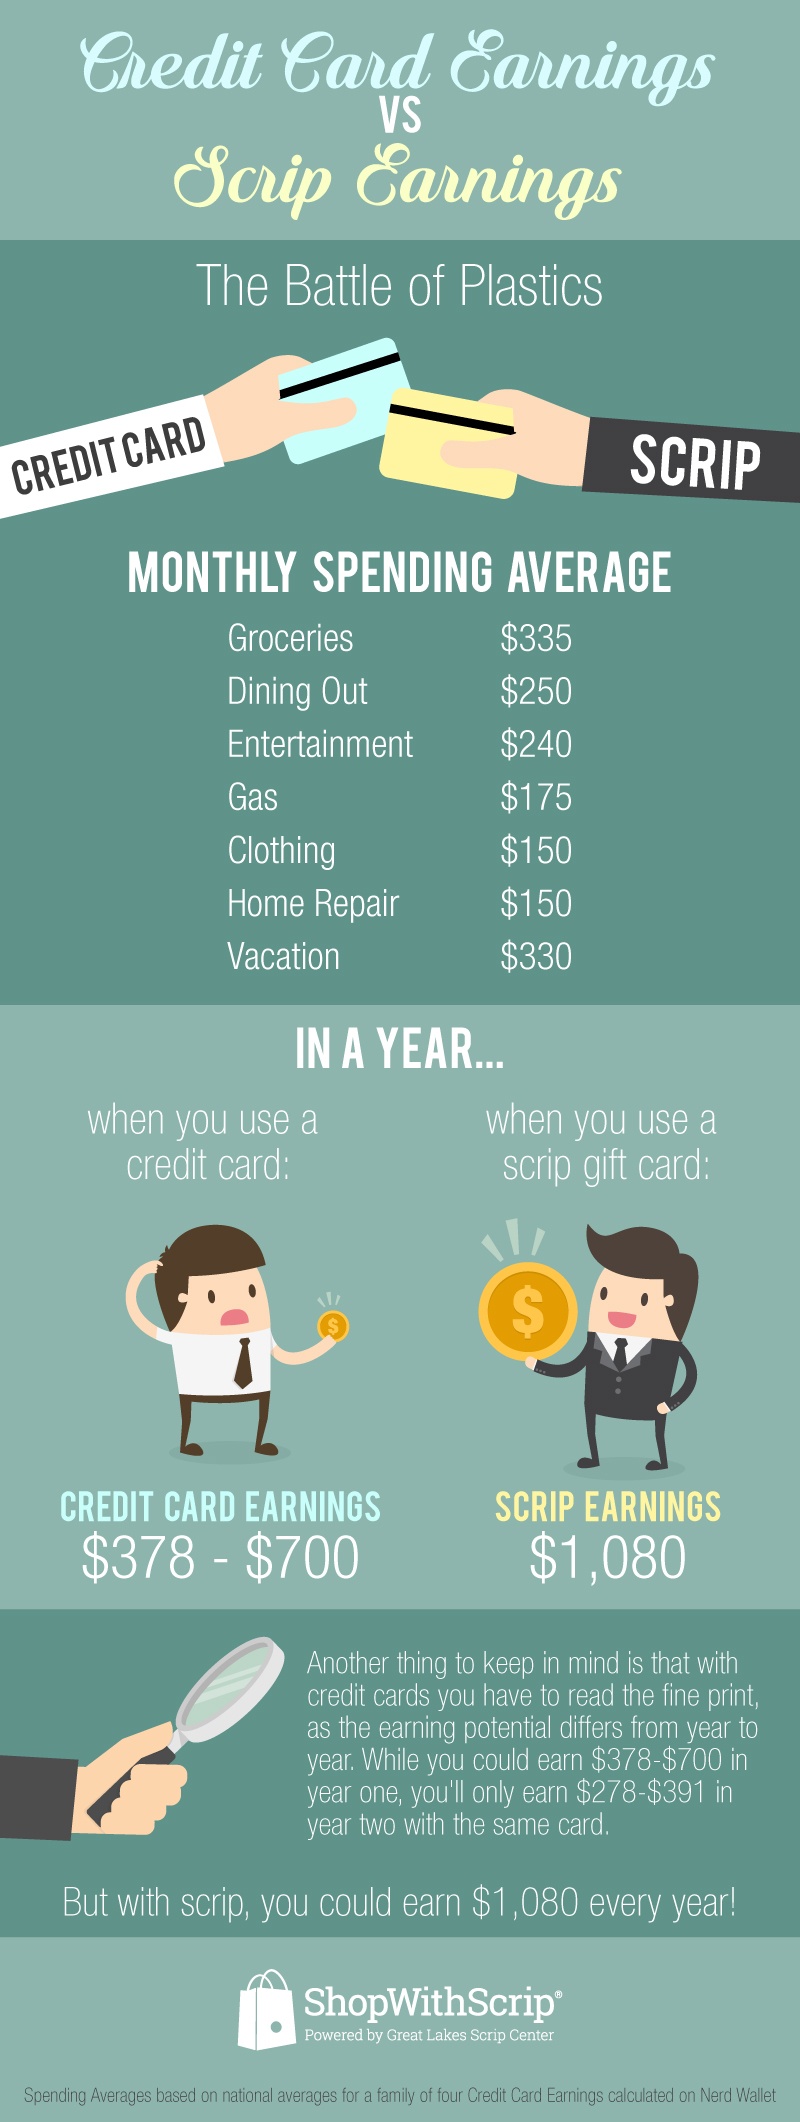 Credit_Card_vs_Scrip_Infographic